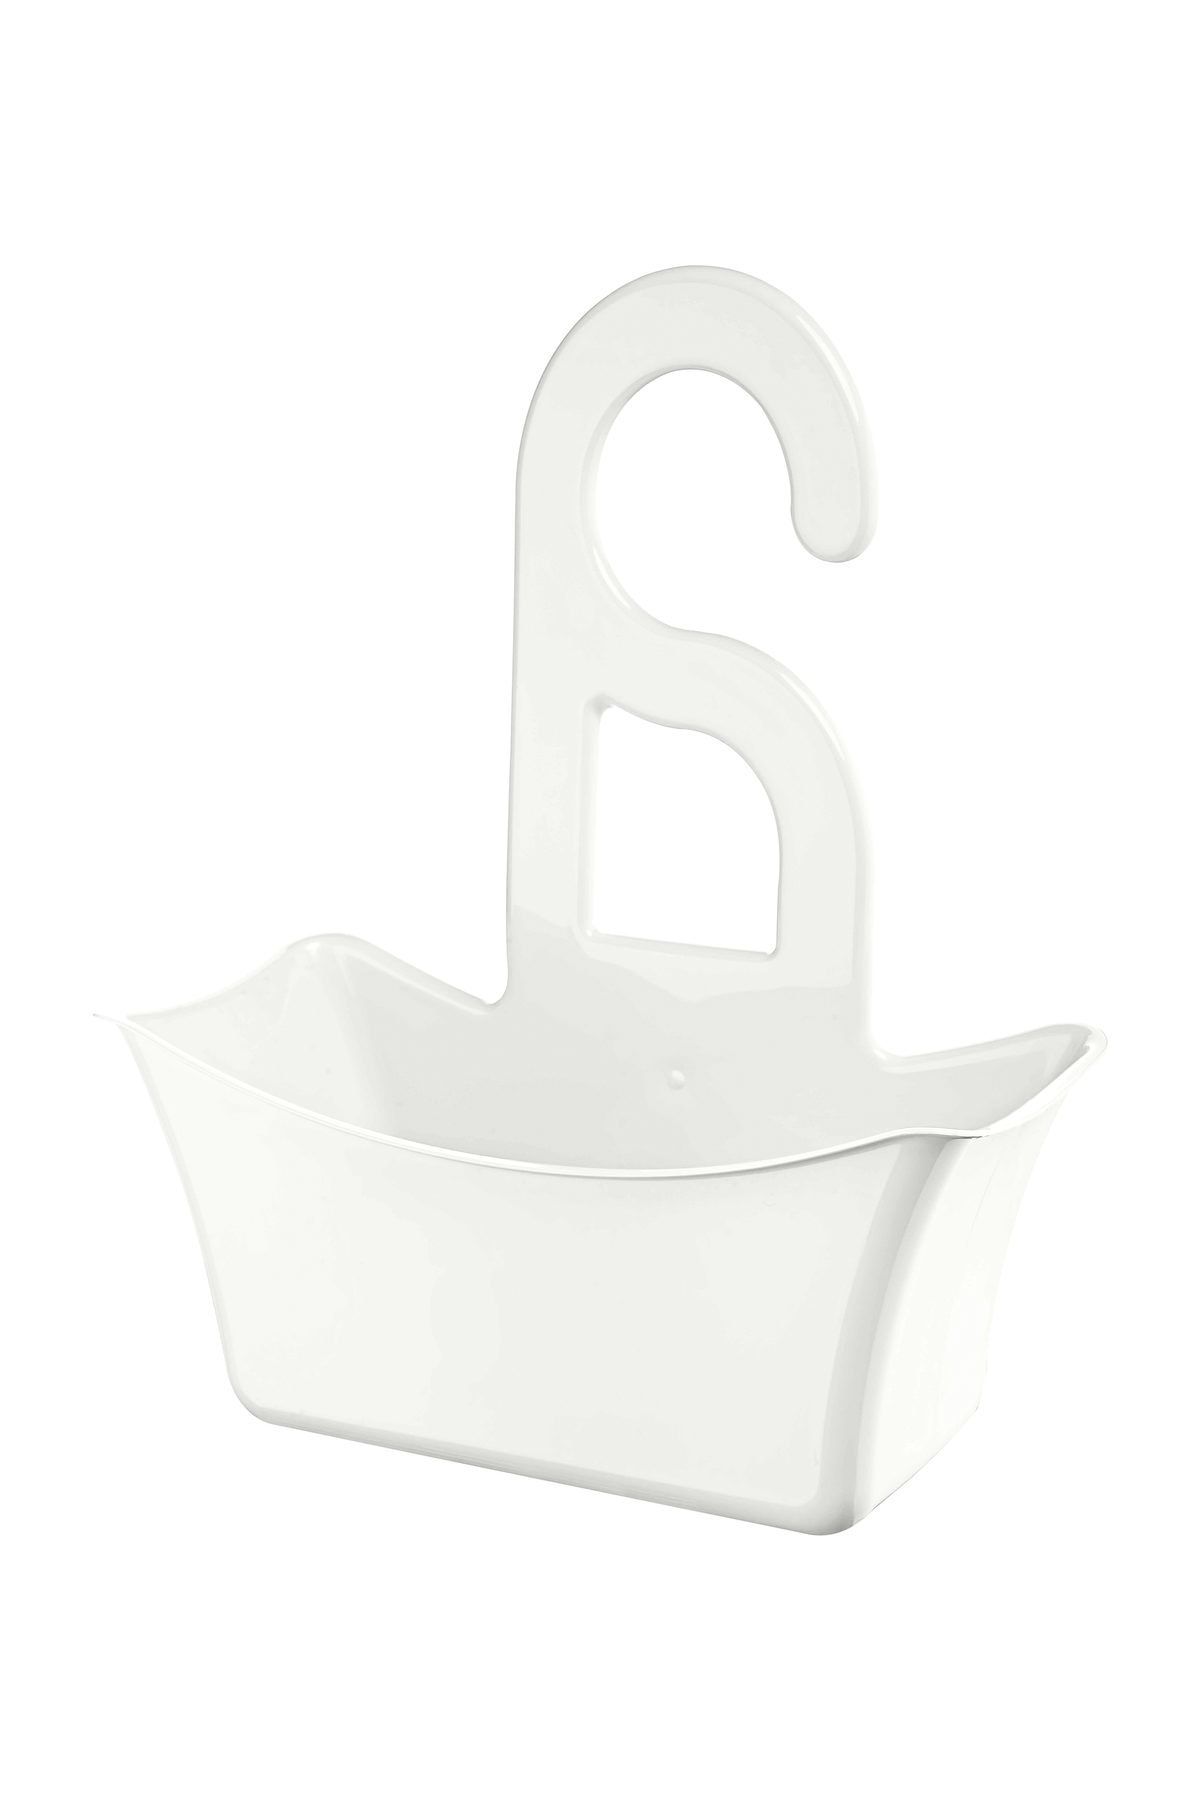 Titiz Hook Çok Amaçlı Duş Banyo Sepeti Organizer - Beyaz TP583BY